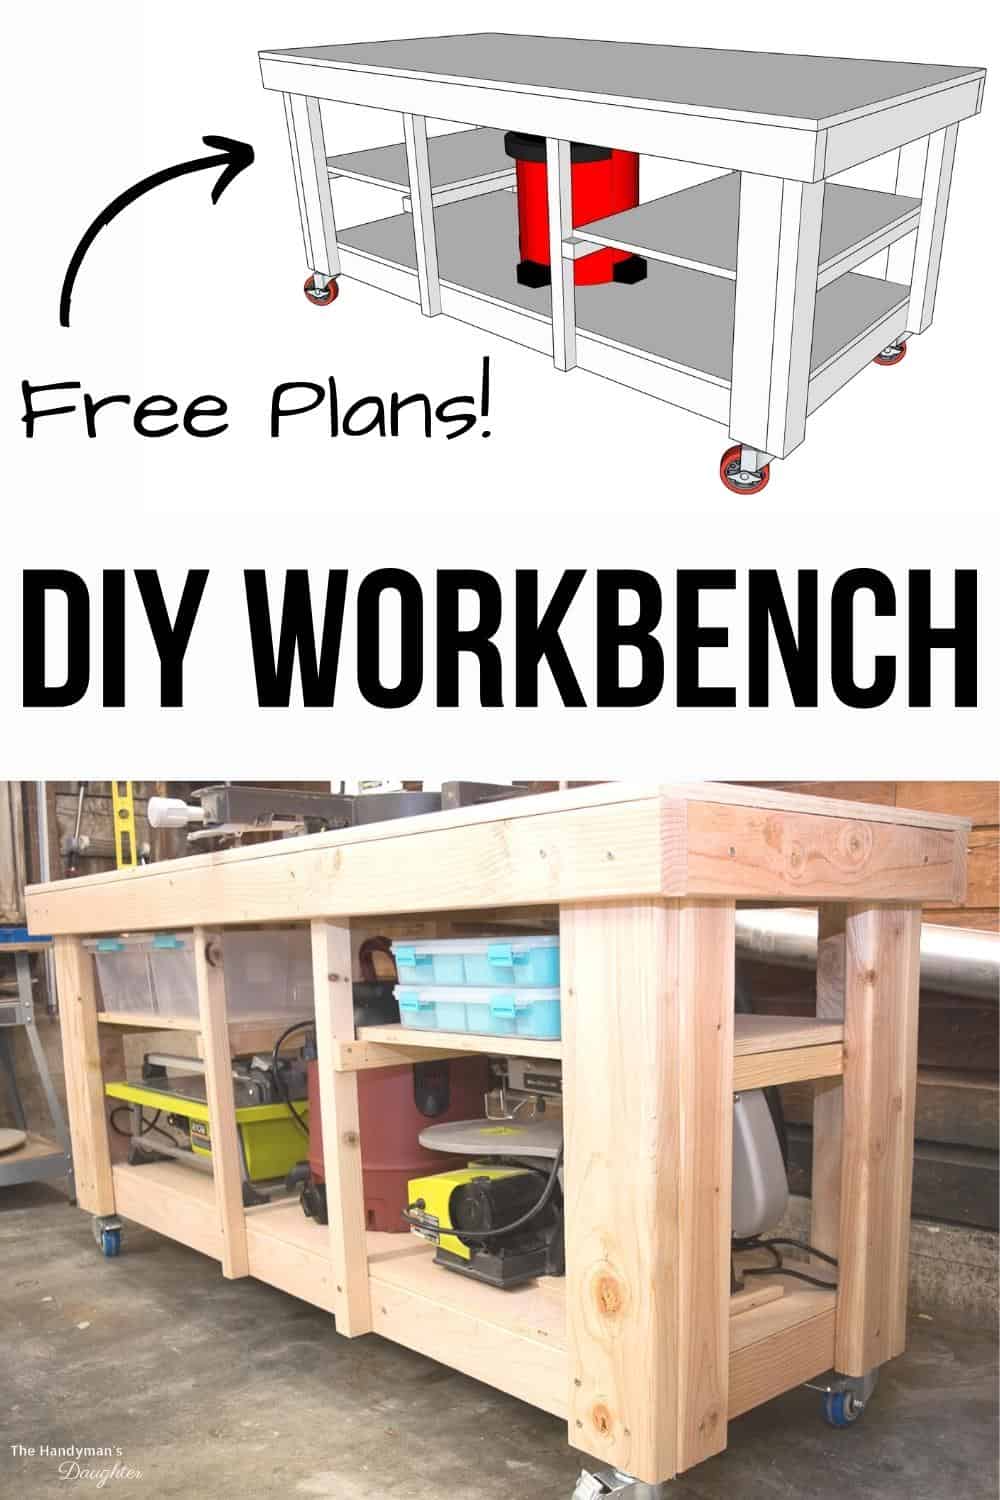 DIY 2x4 workbench with free plans